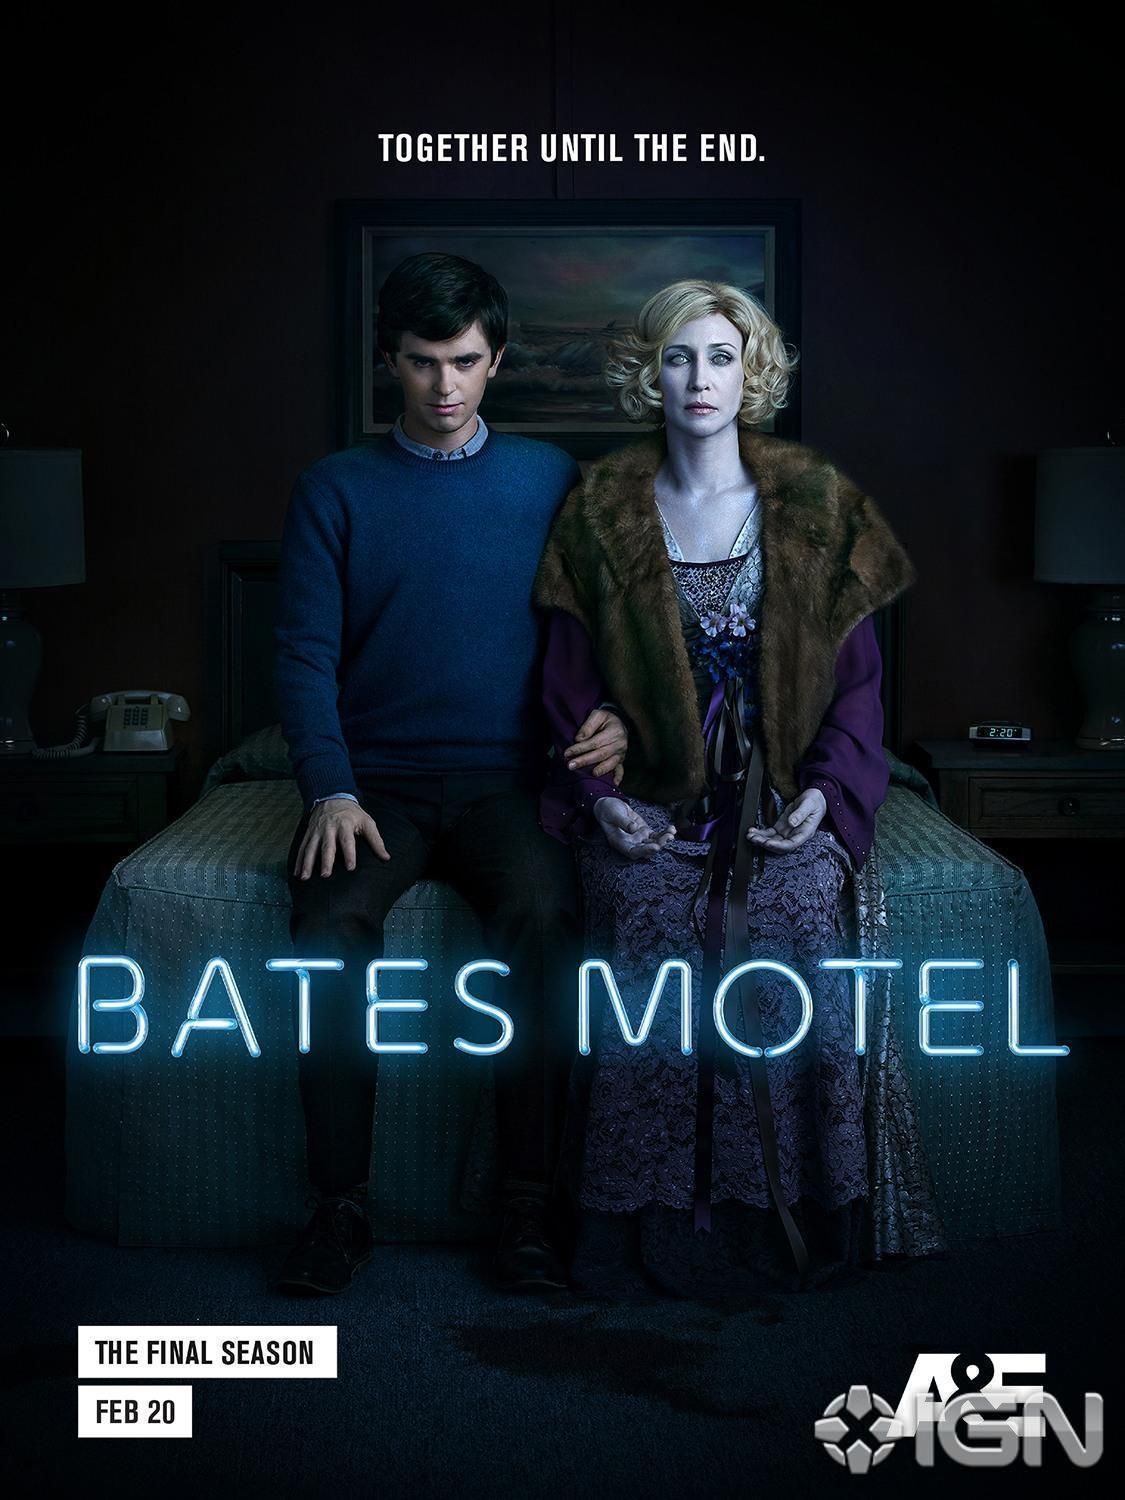 Bates motel season 5 full episodes